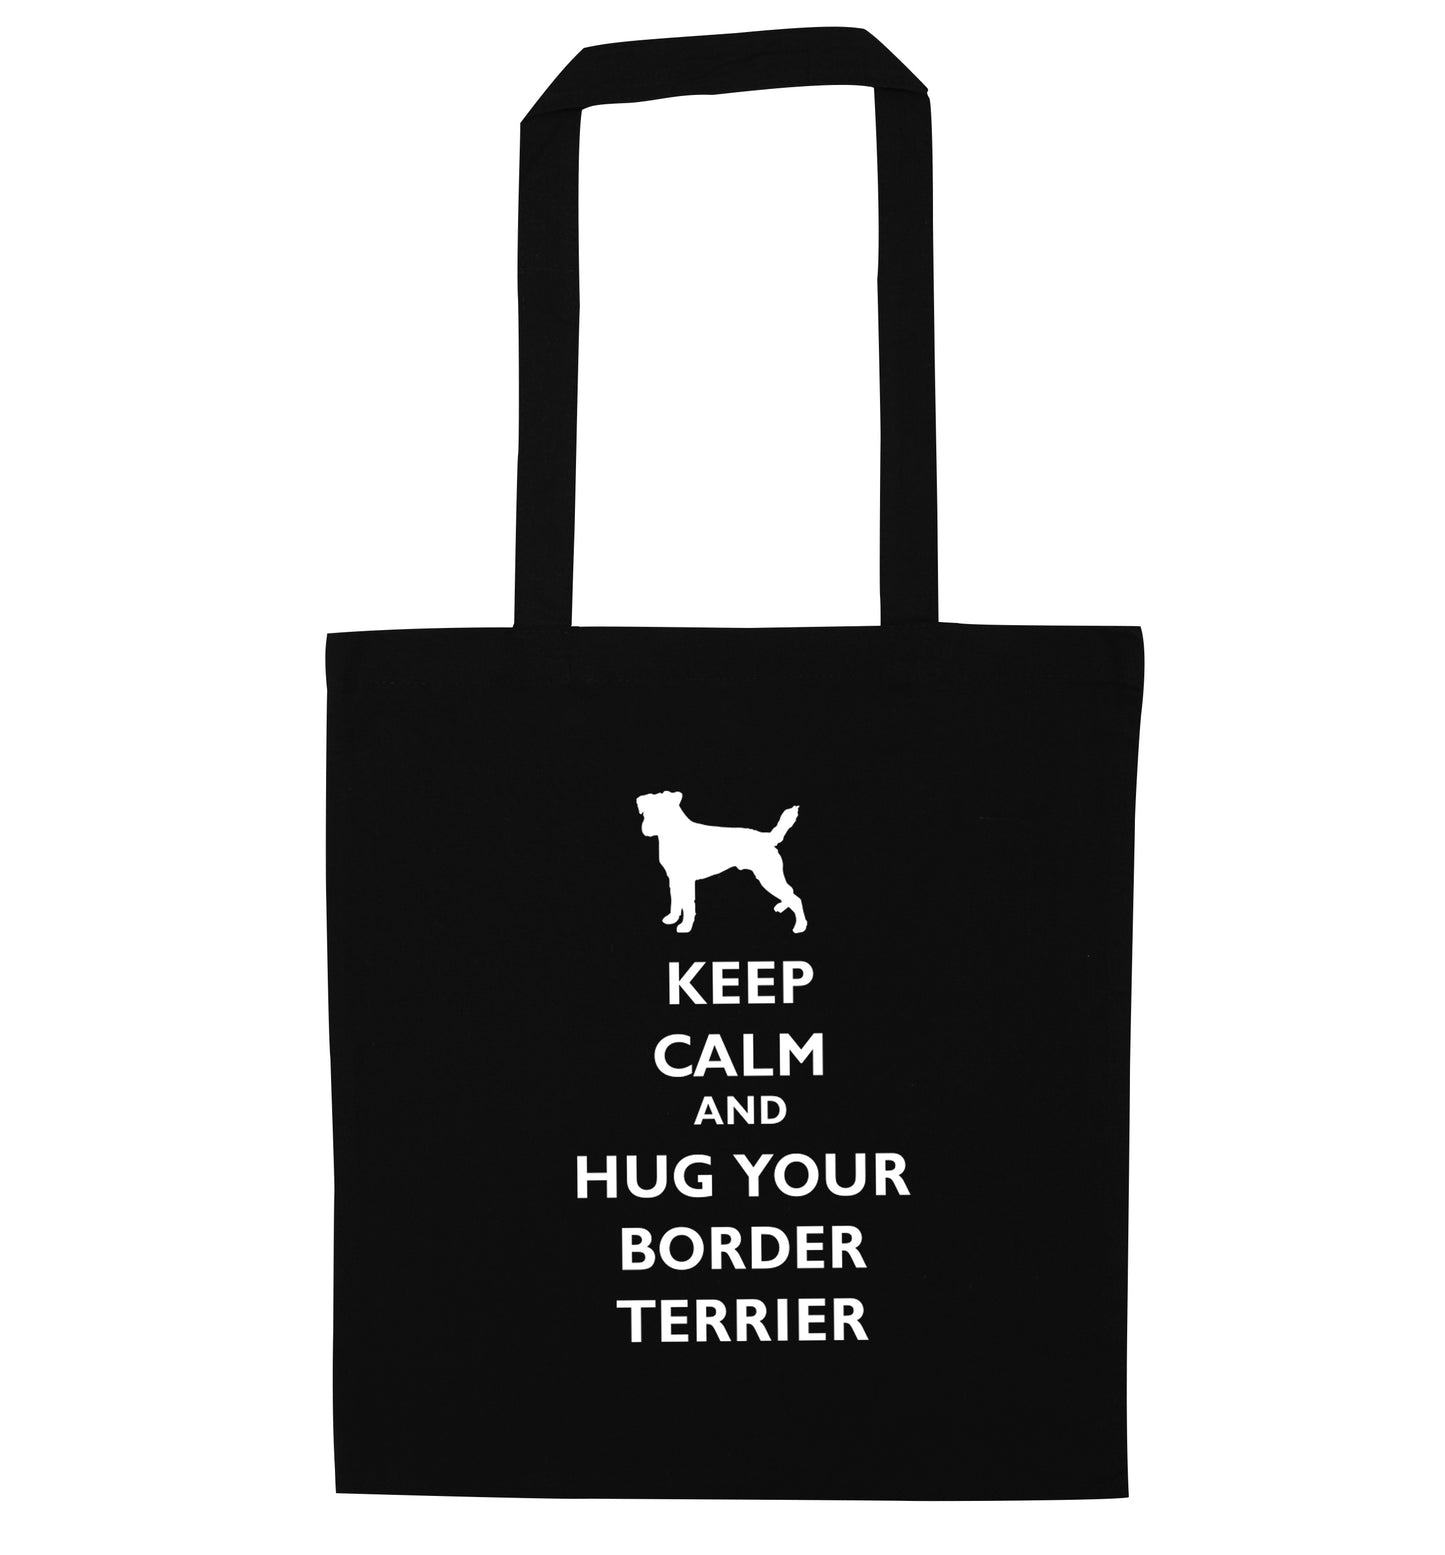 Keep calm and hug your border terrier black tote bag